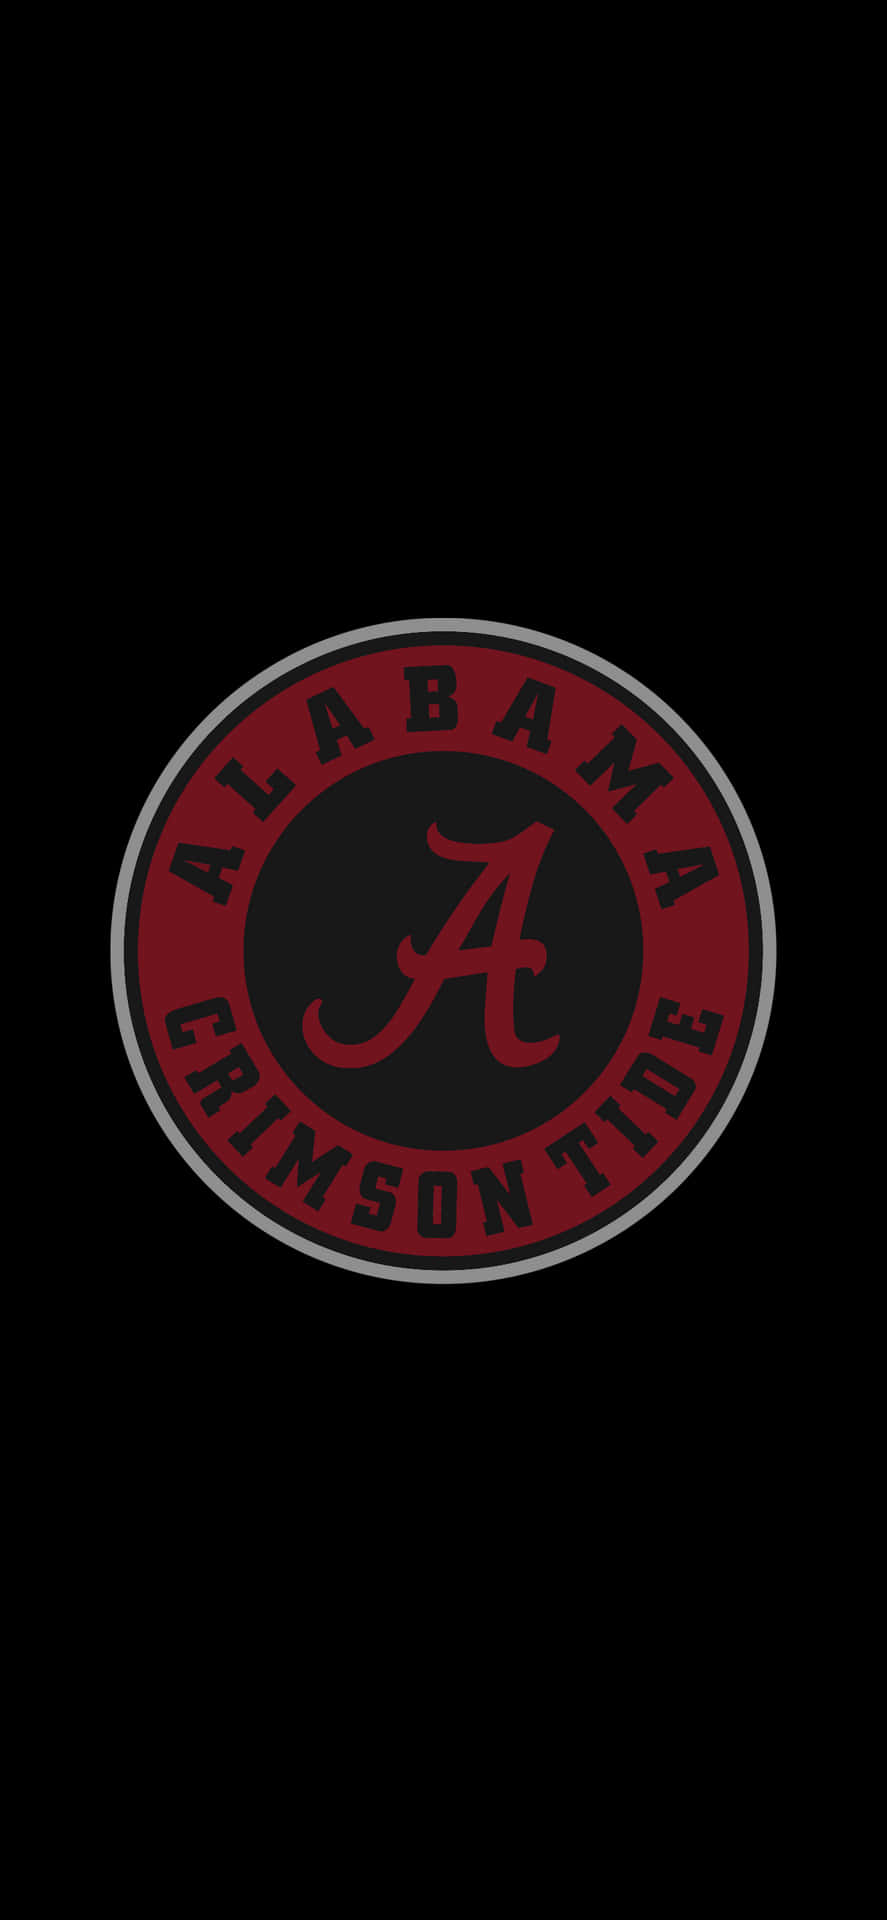 Alabamafootball-logo Wallpaper